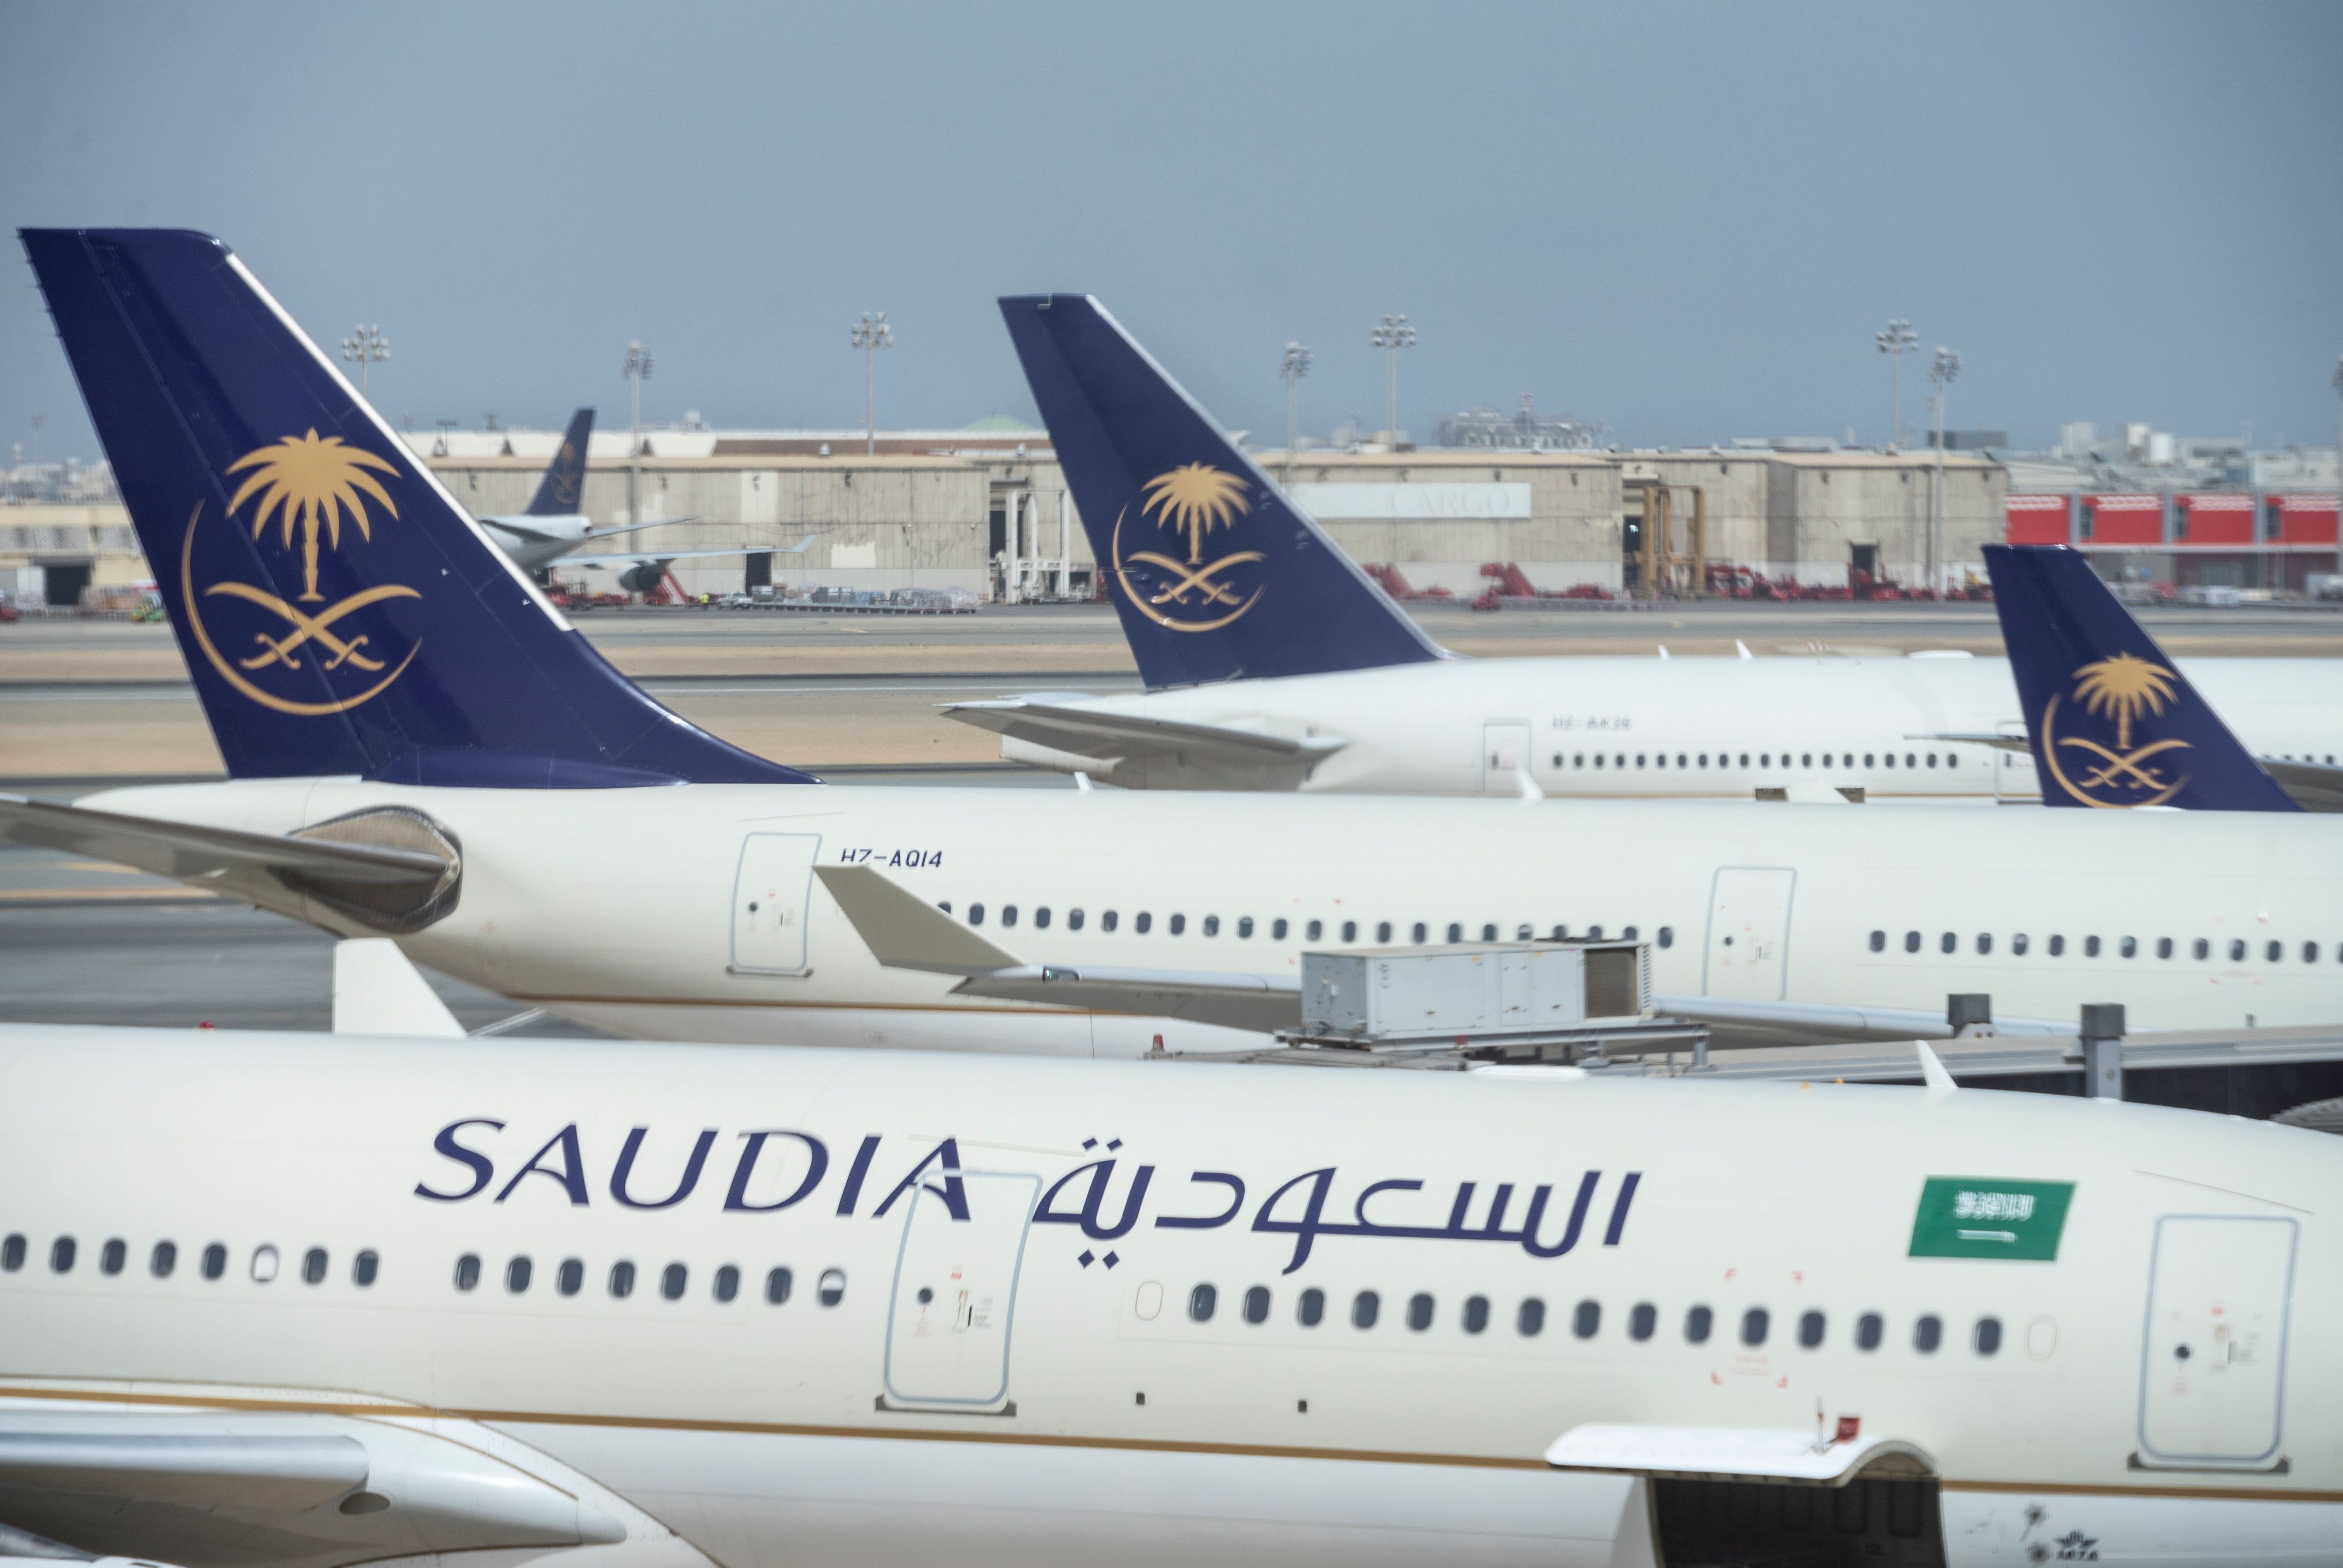 Saudia aircraft parked at Jeddah Airport 